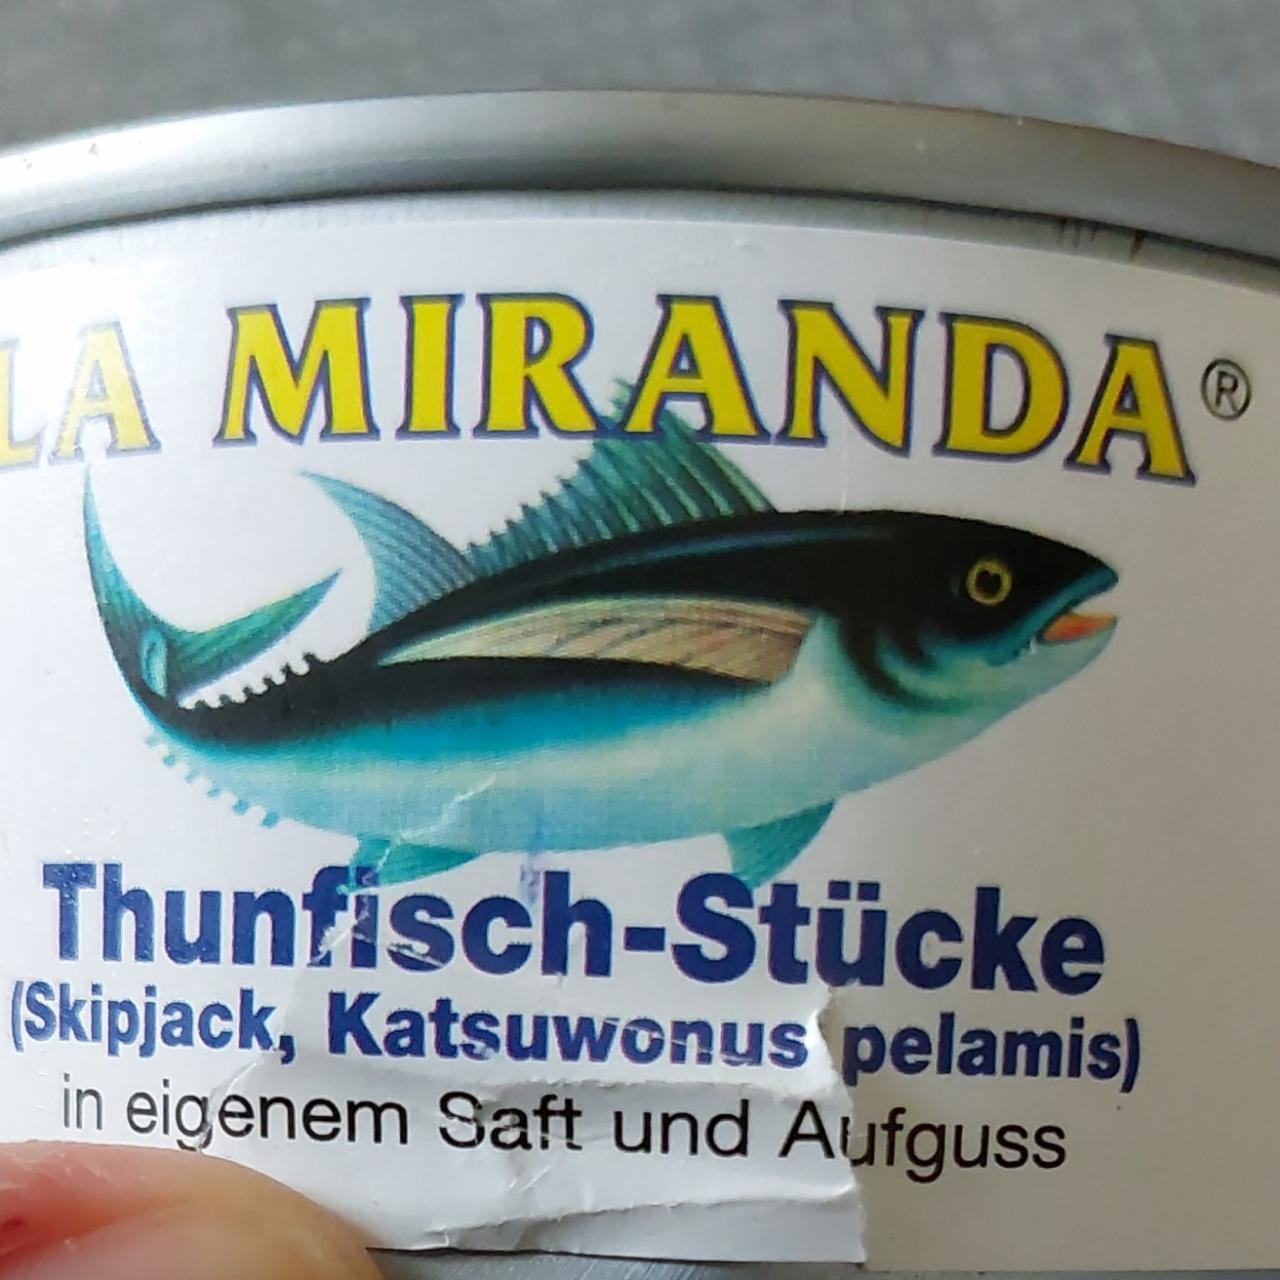 Zdjęcia - Thunfisch-Stucke la miranda